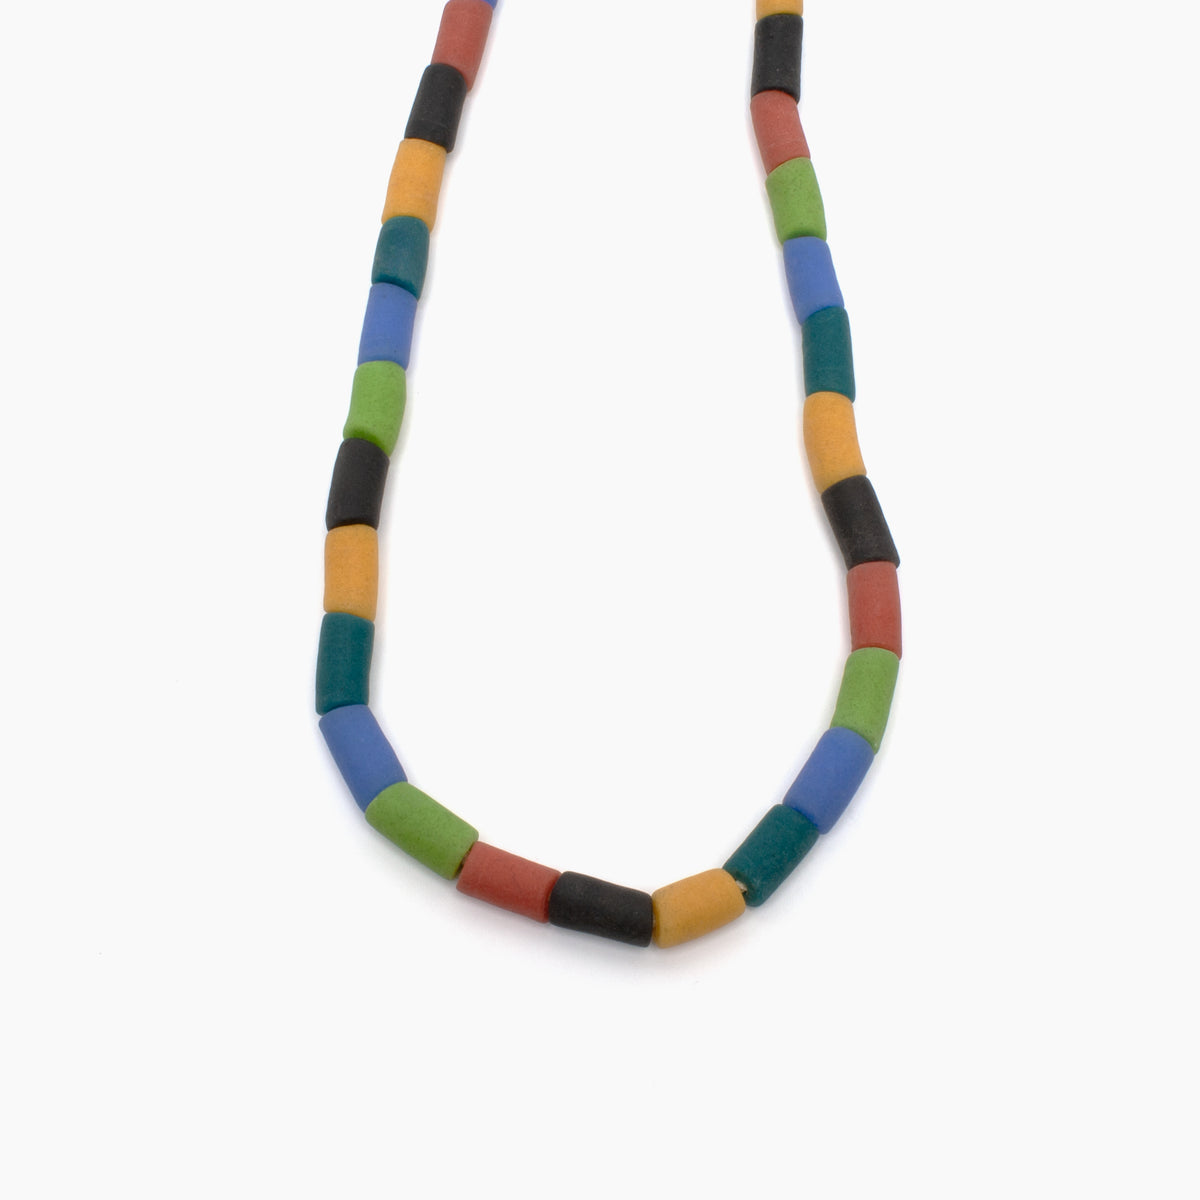 Strand of Bold, Bright Tube Beads from Ghana